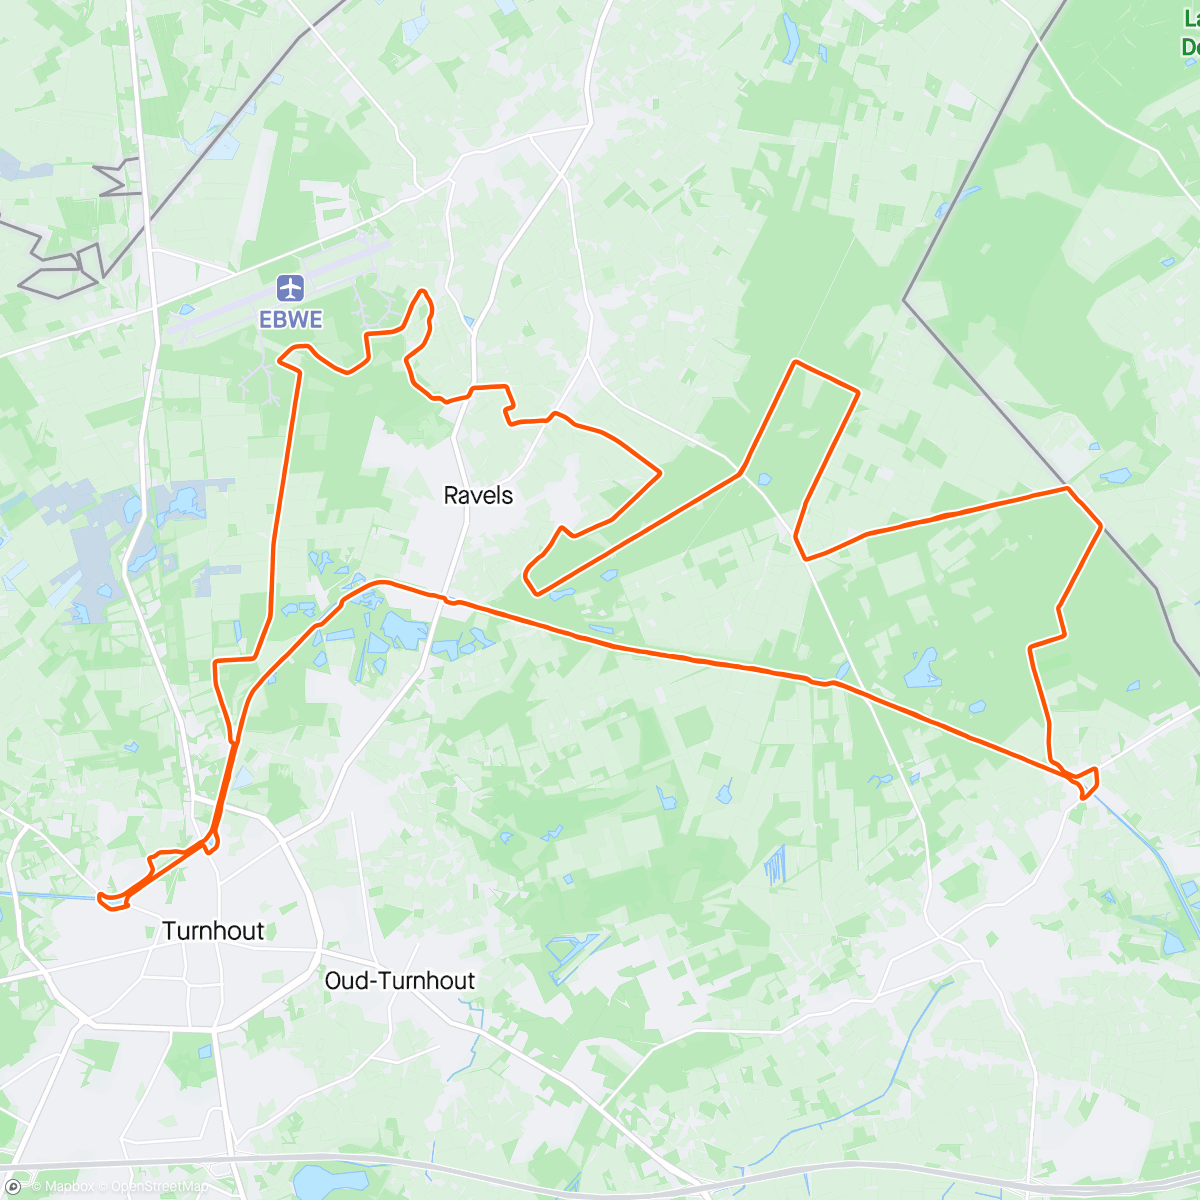 Map of the activity, BK Gravel in Turnhout full gazz